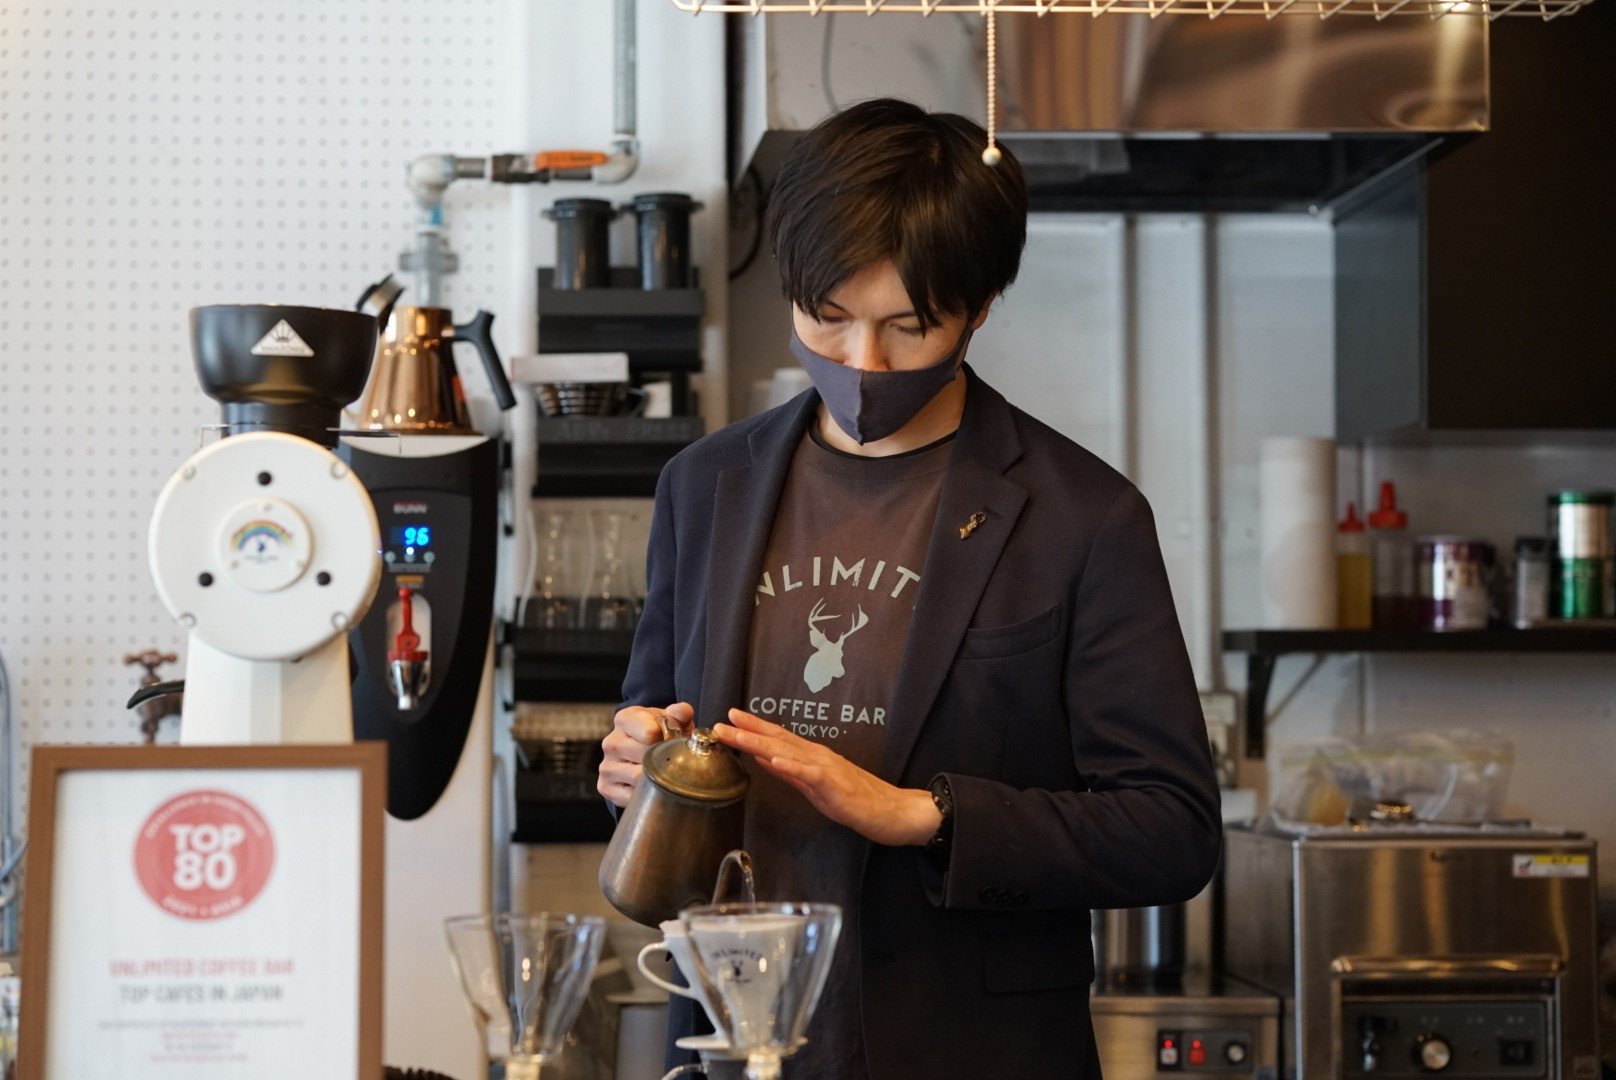 UNLIMITED COFFEE BARの田中恭平氏によるモクテルセミナーを開催します！